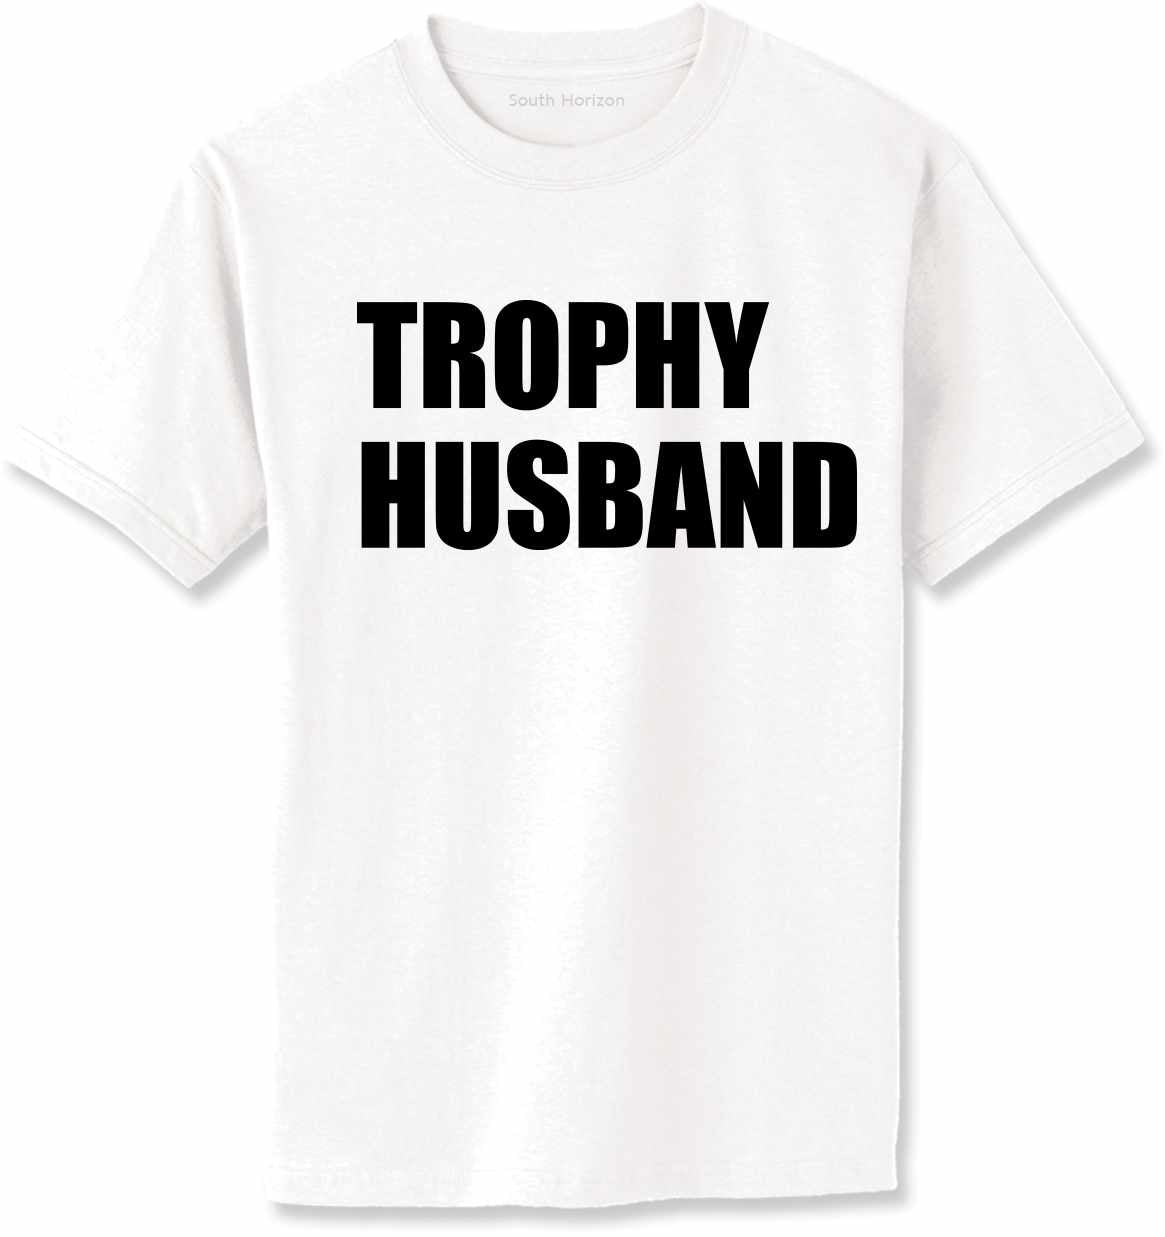 Trophy Husband on Adult T-Shirt (#1326-1)